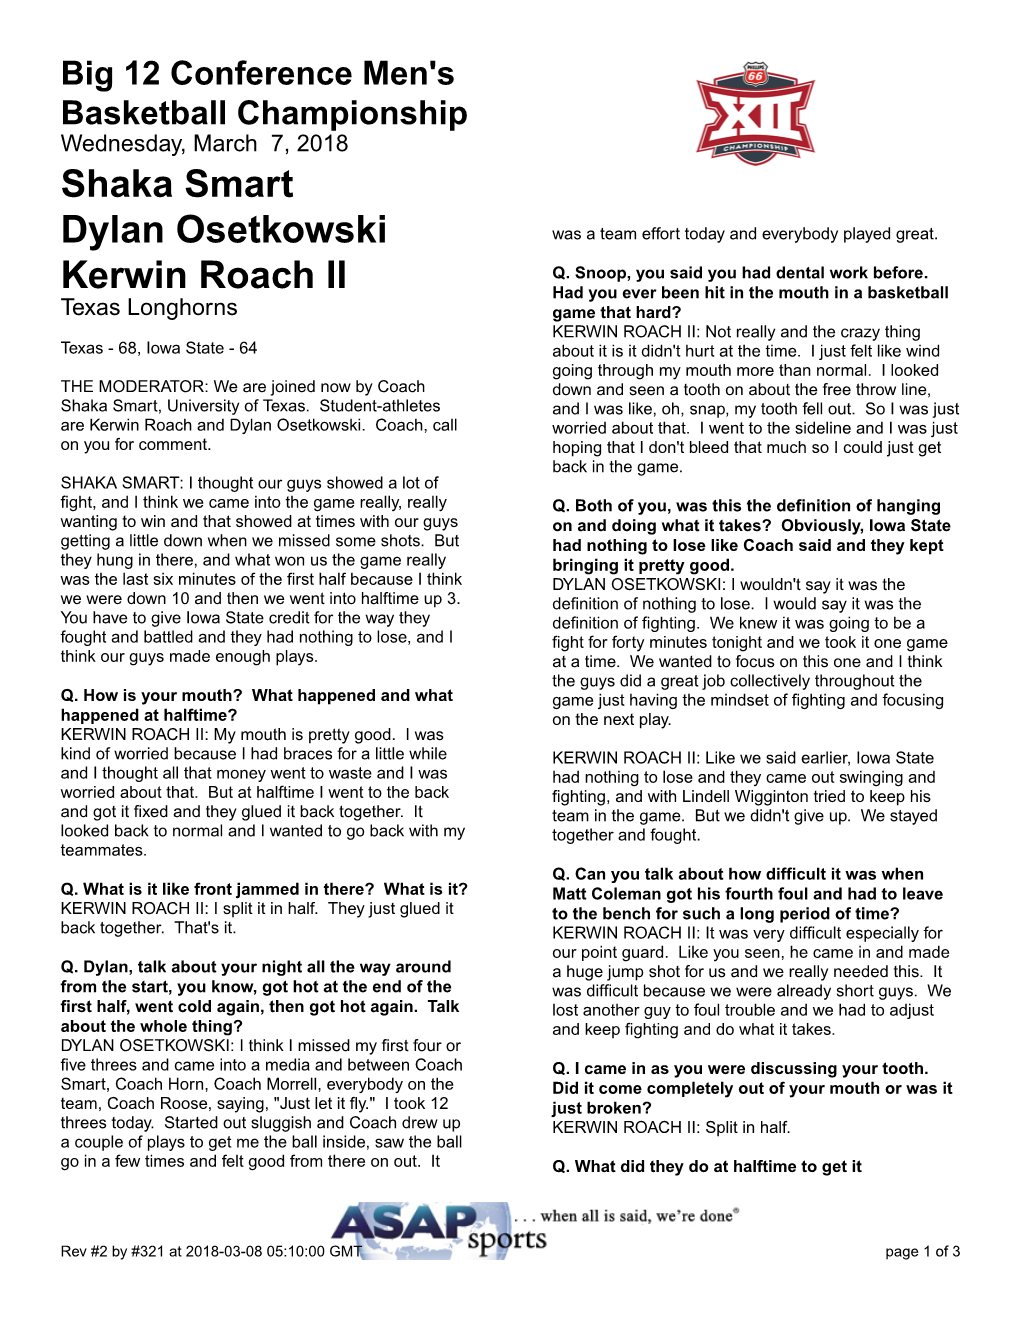 Shaka Smart Dylan Osetkowski Kerwin Roach II